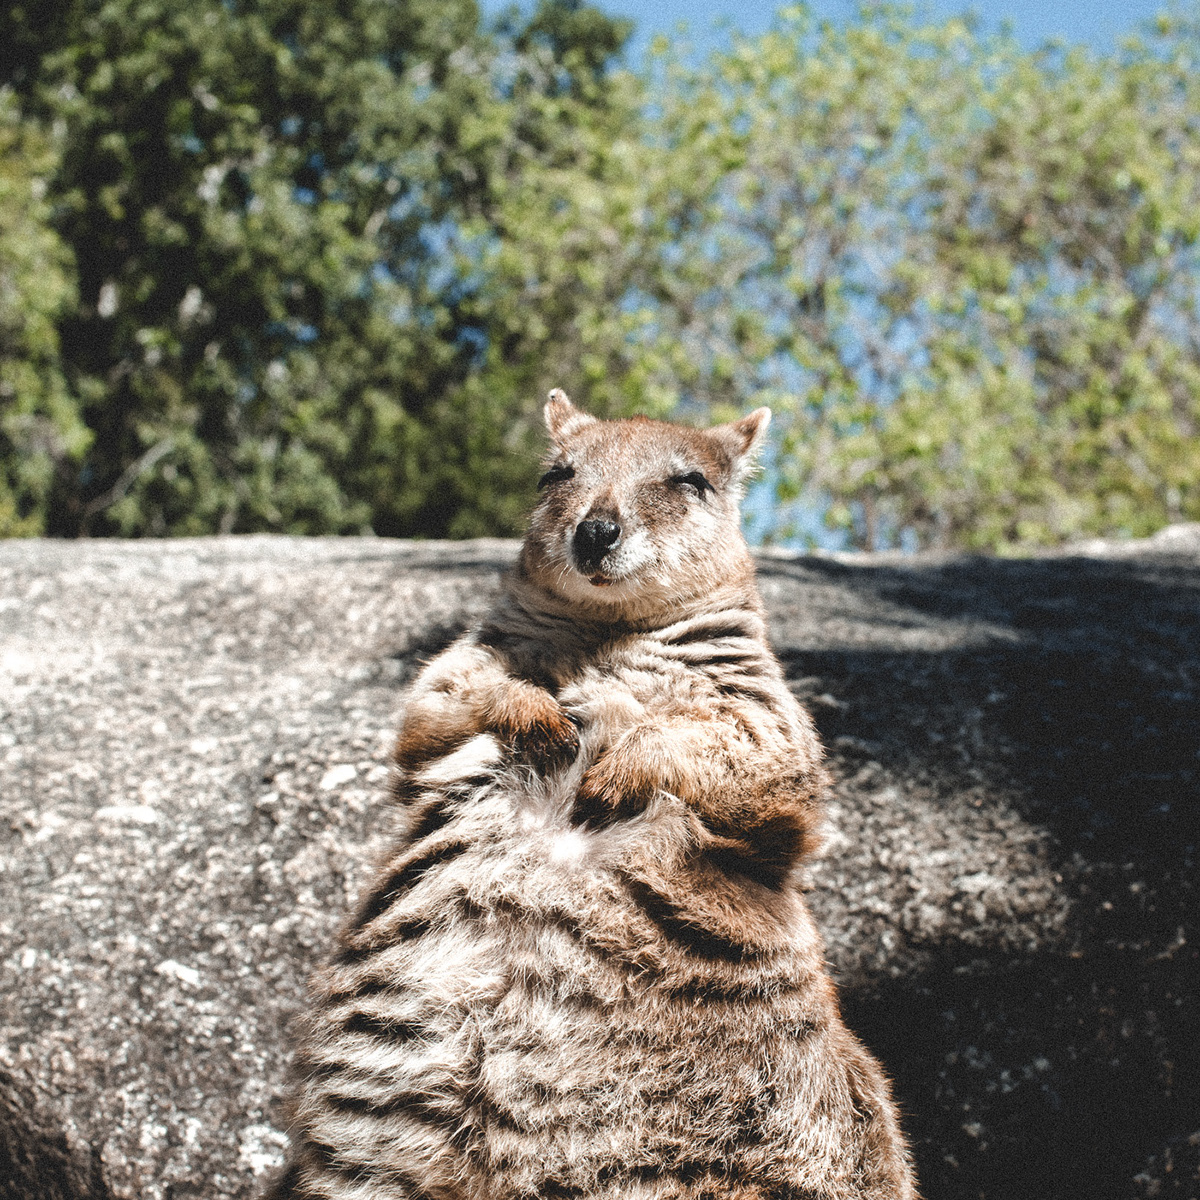 animals wildlife Wildlife photography australian animals kangaroo Australia marsupial wallaby rock wallaby